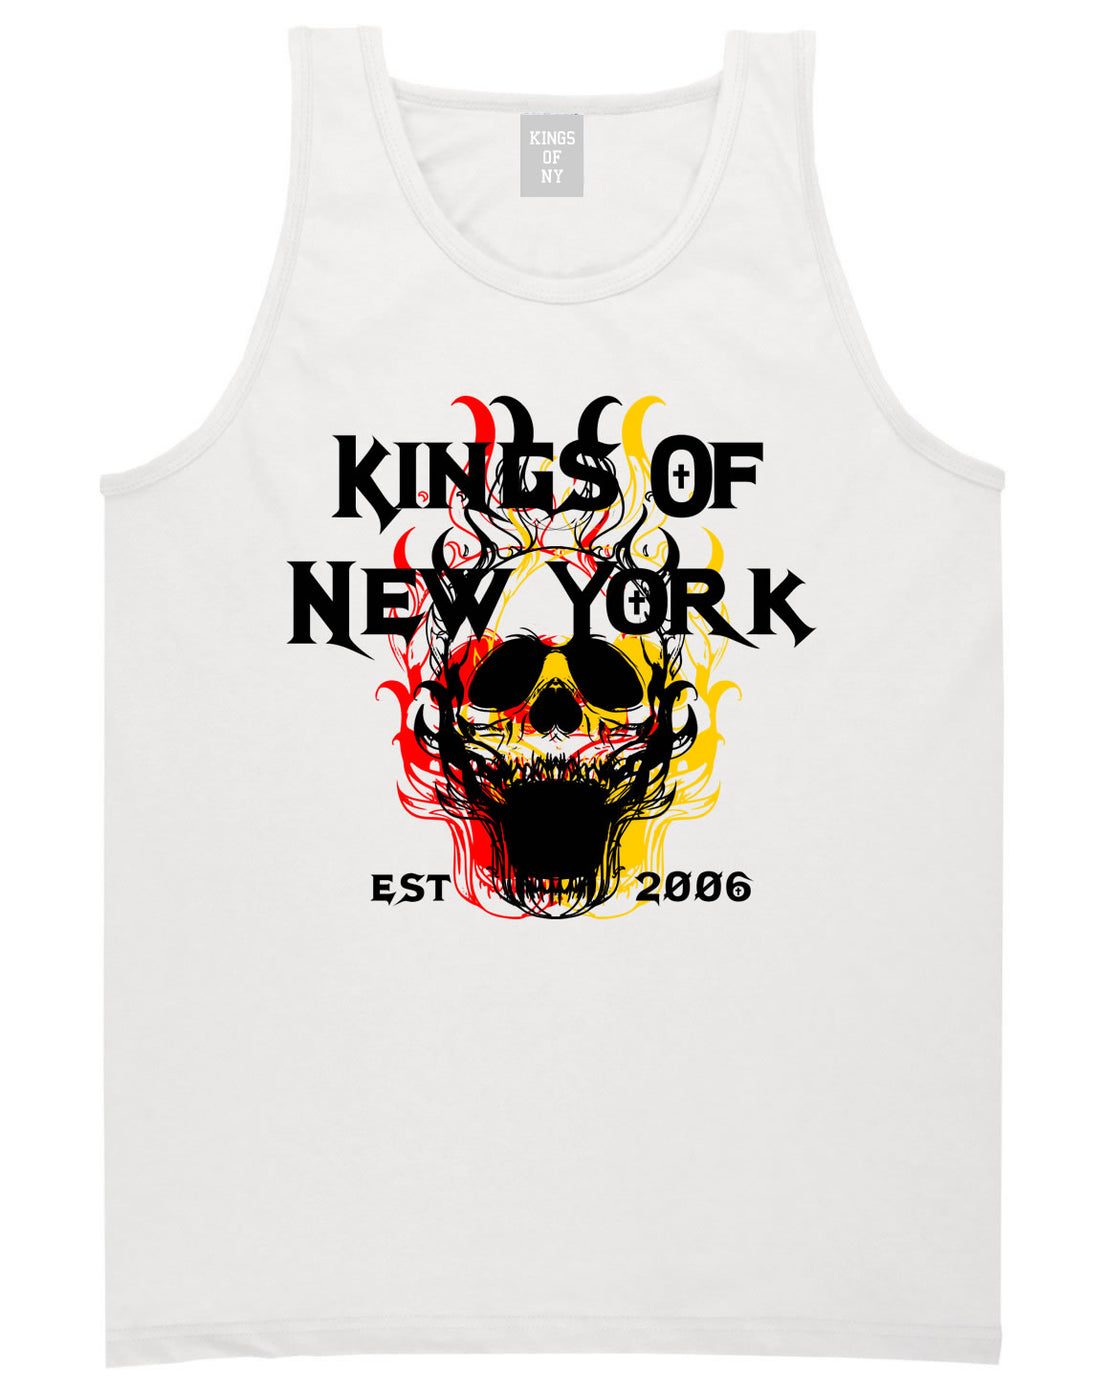 Kings Of New York Burning Skulls Mens Tank Top Shirt White By Kings Of NY